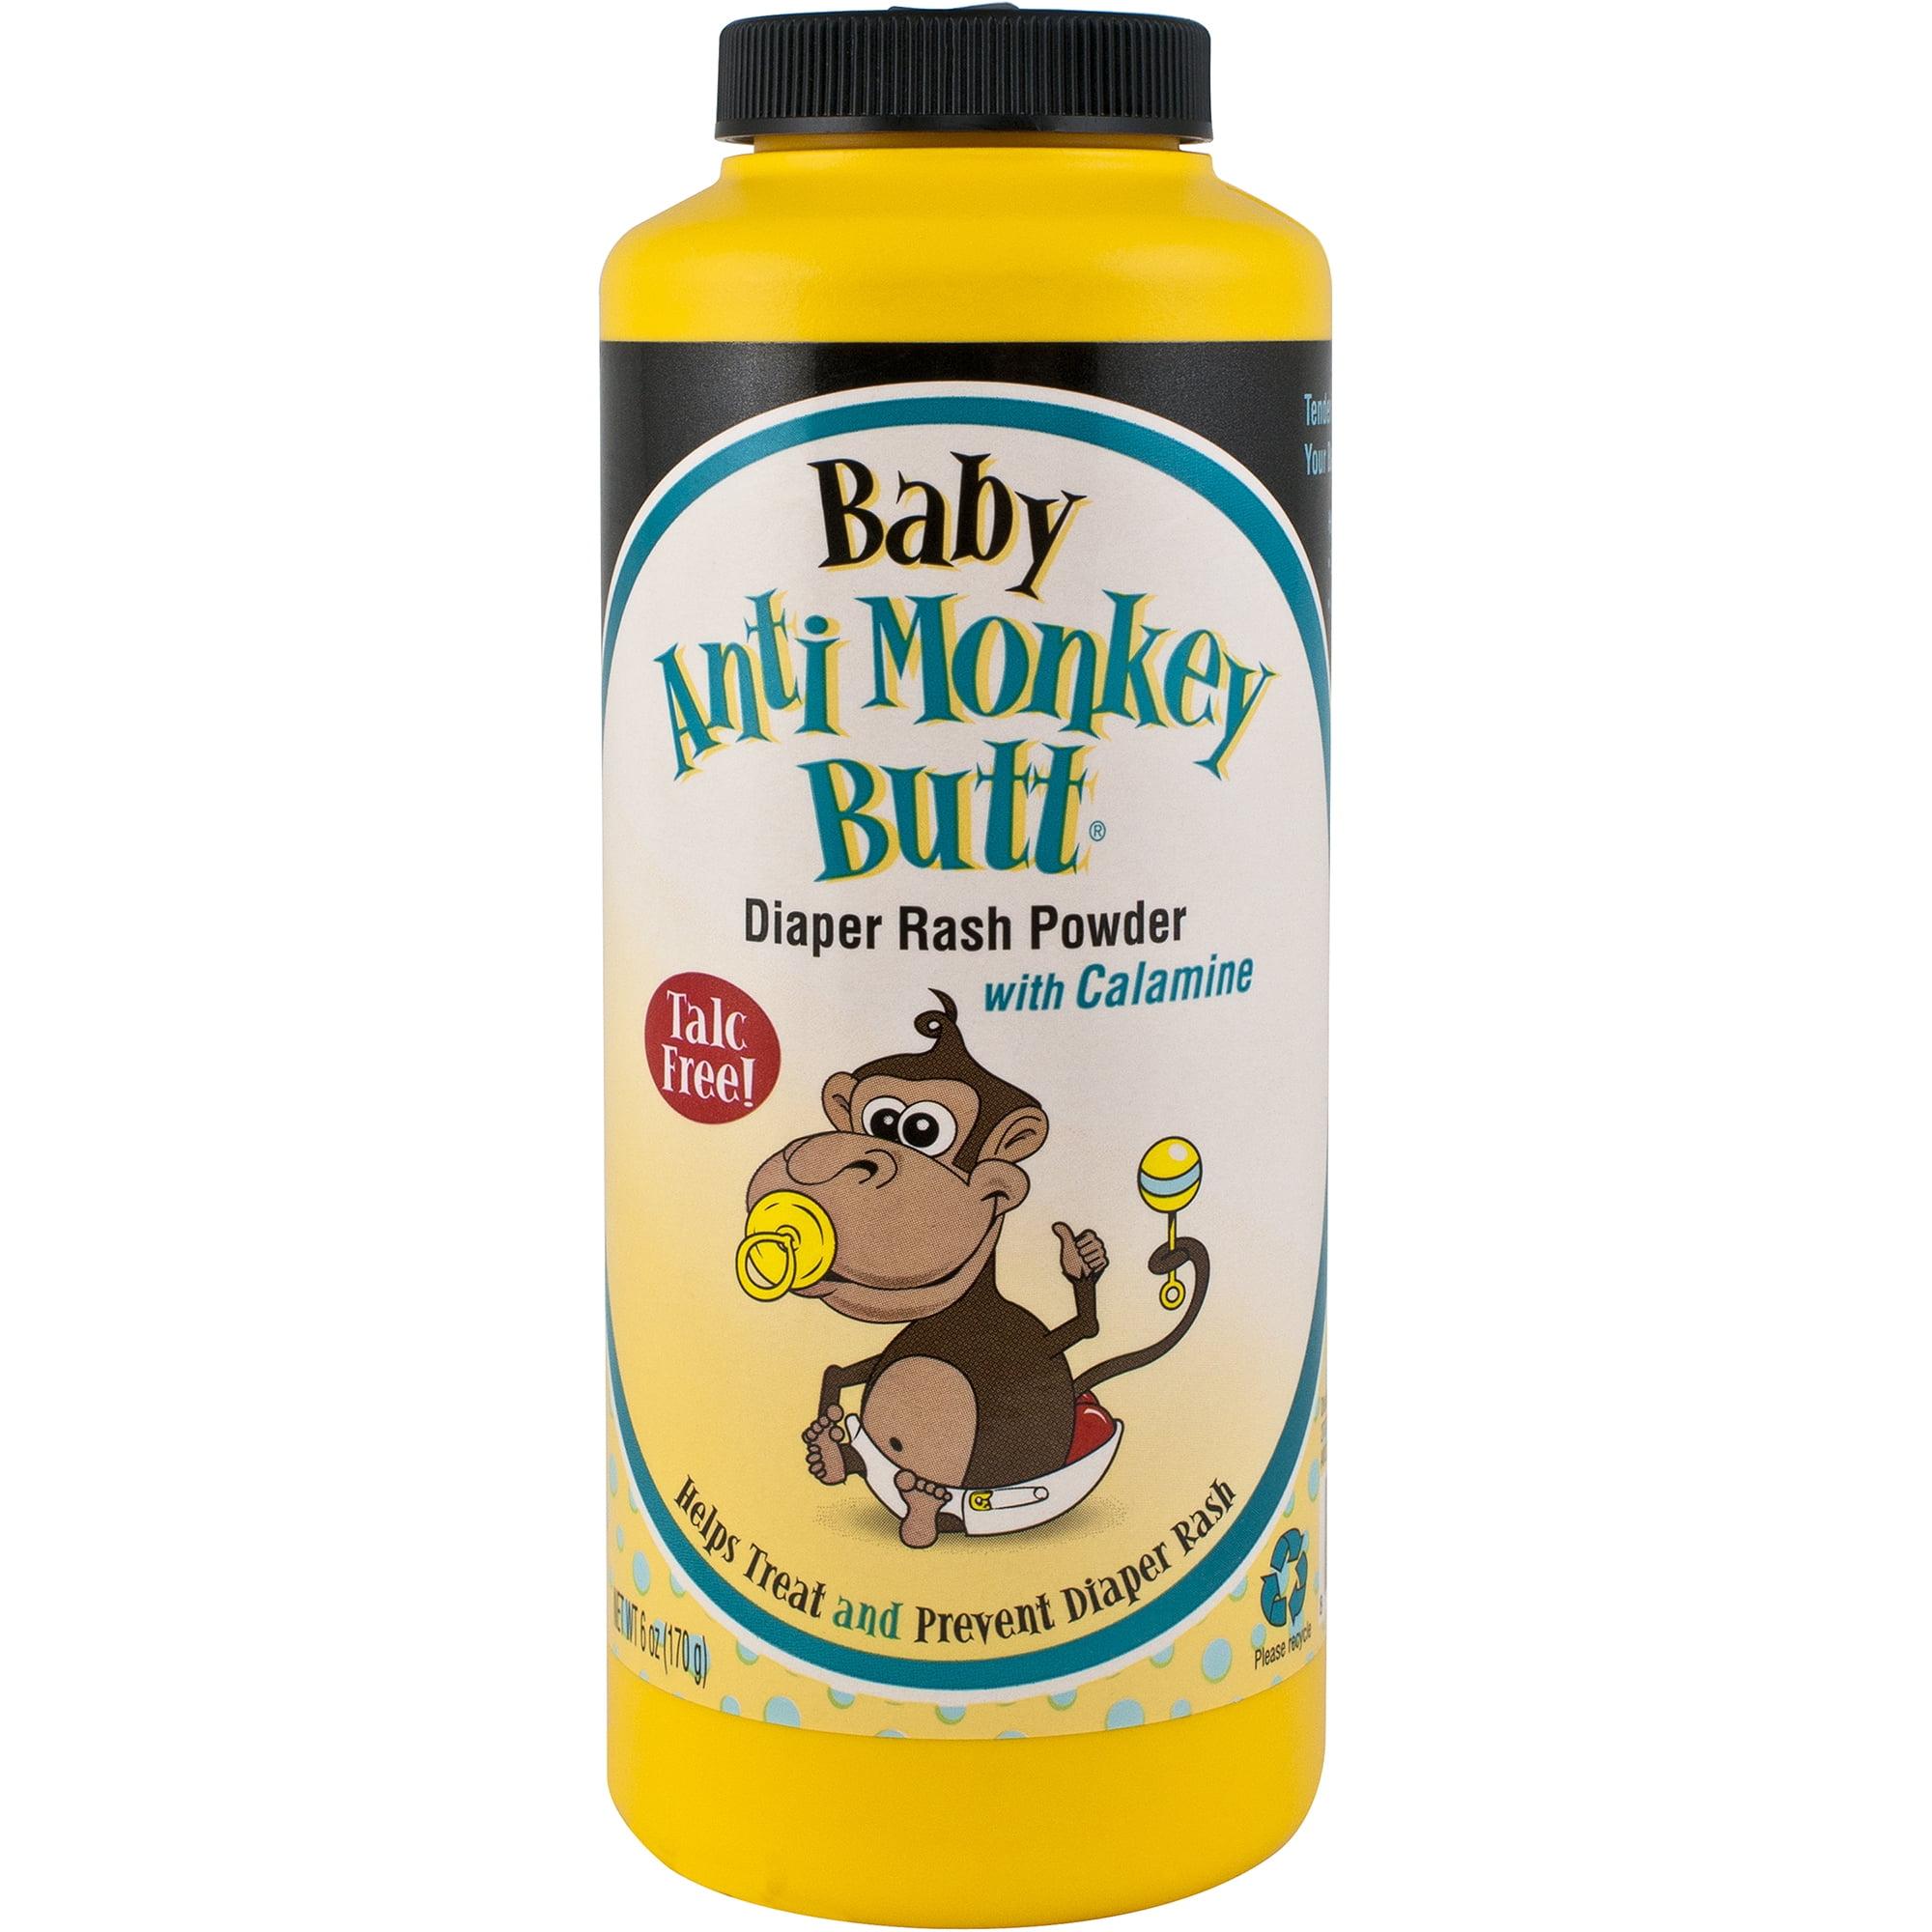 Baby Anti Monkey Butt Diaper Rash 